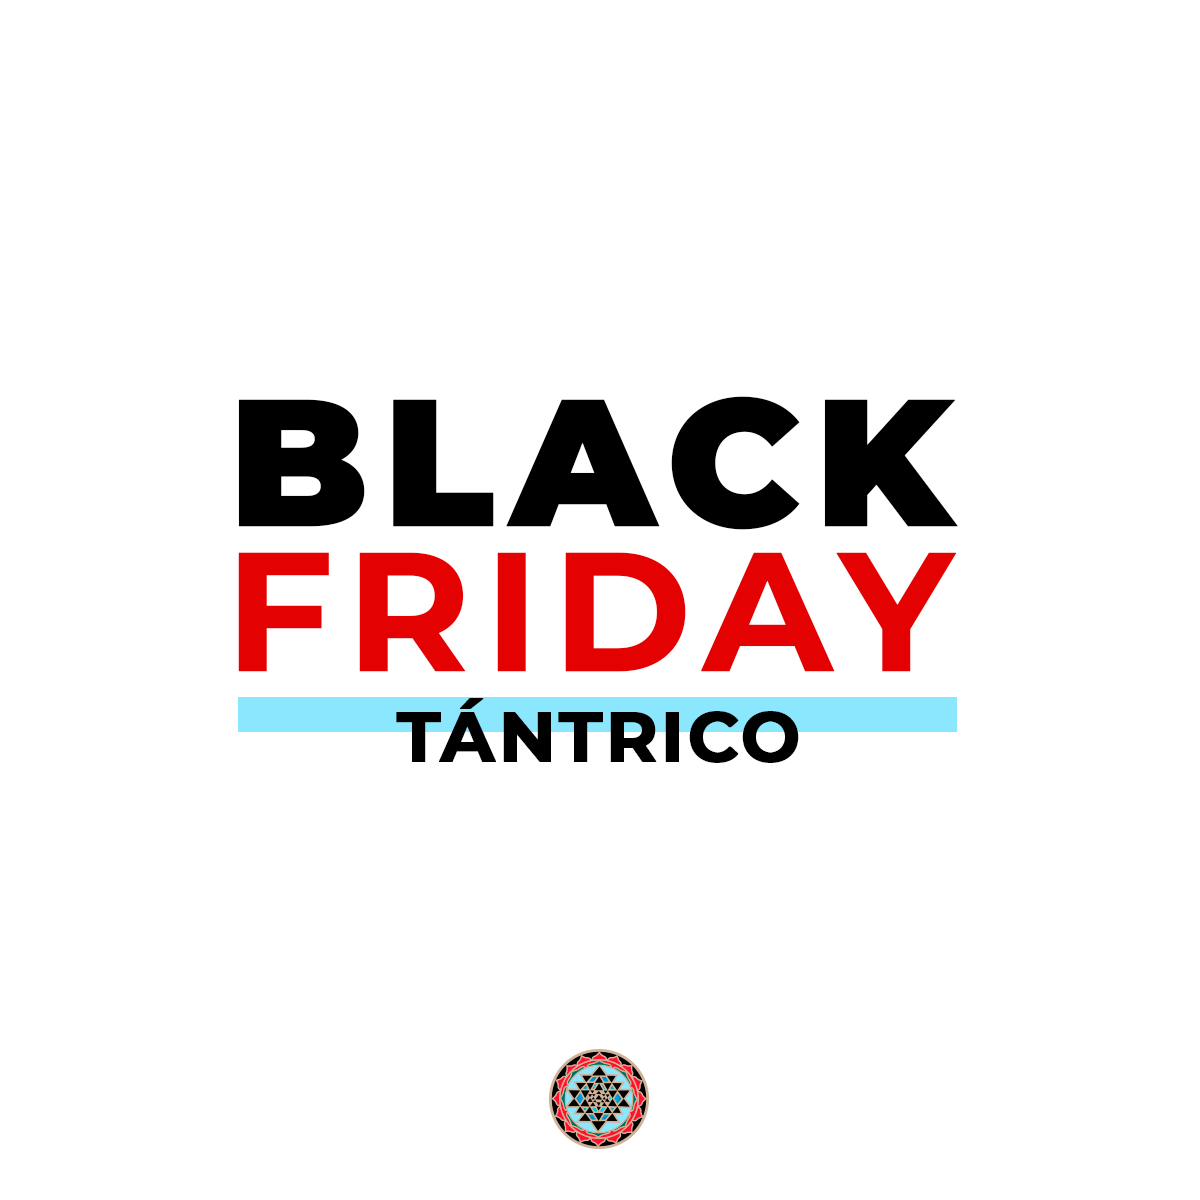 Black Friday Tántrico